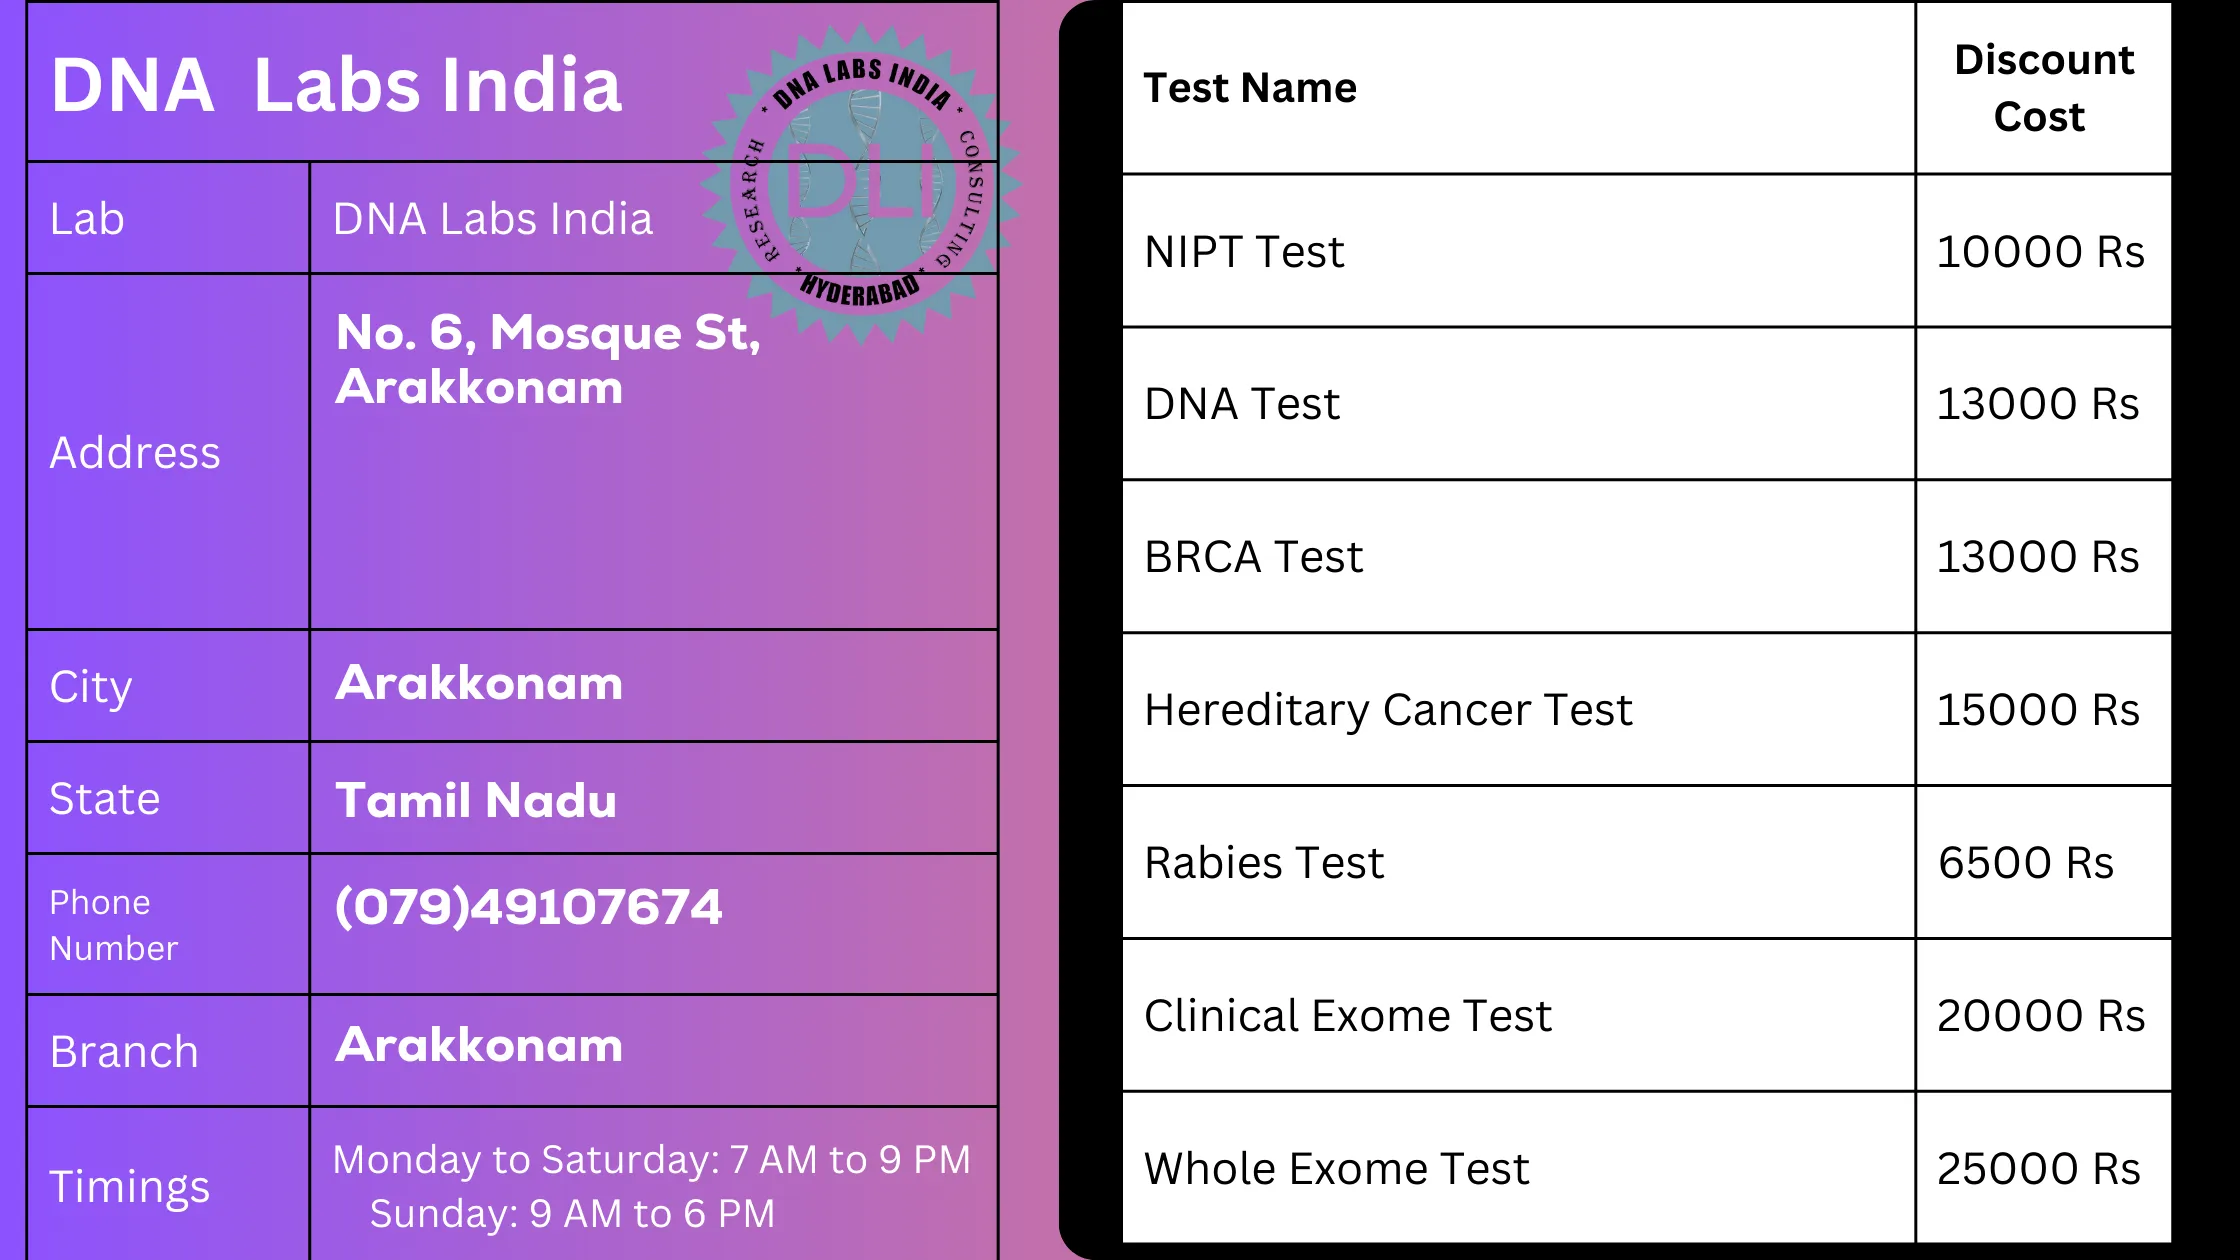 DNA Labs India - Arakkonam: Your Trusted Genetic Testing Partner